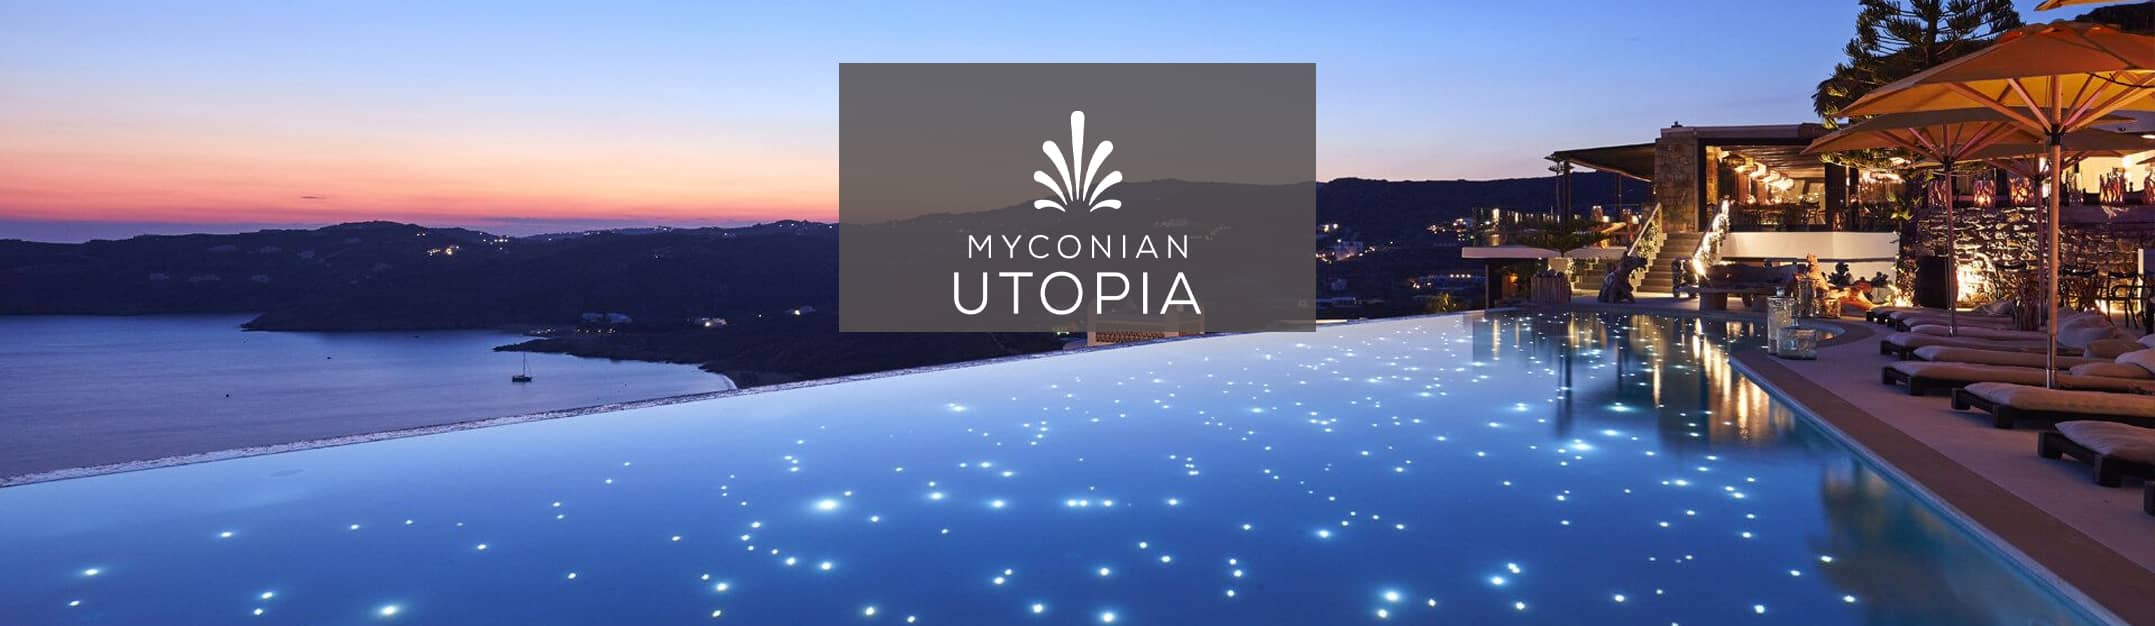 Myconian Utopia